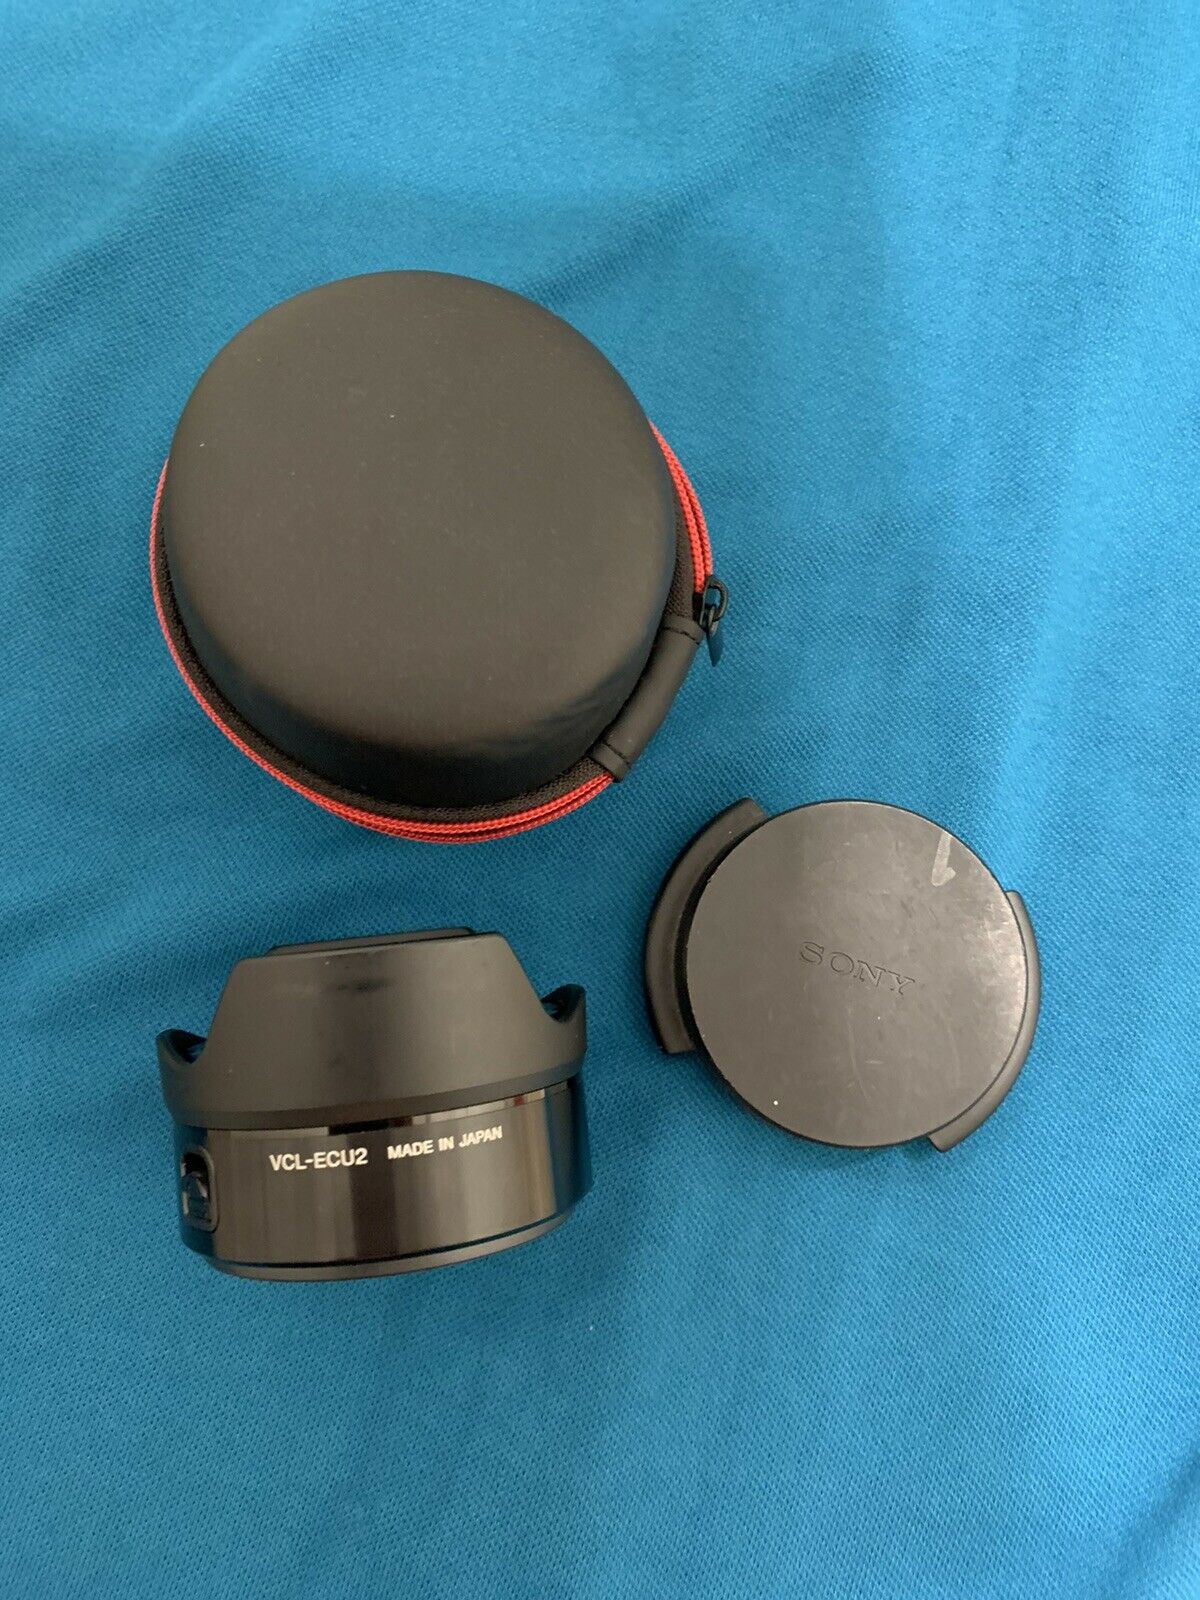 Sony Vcl-ecu2 Wide Angle Converter Lens - Use.